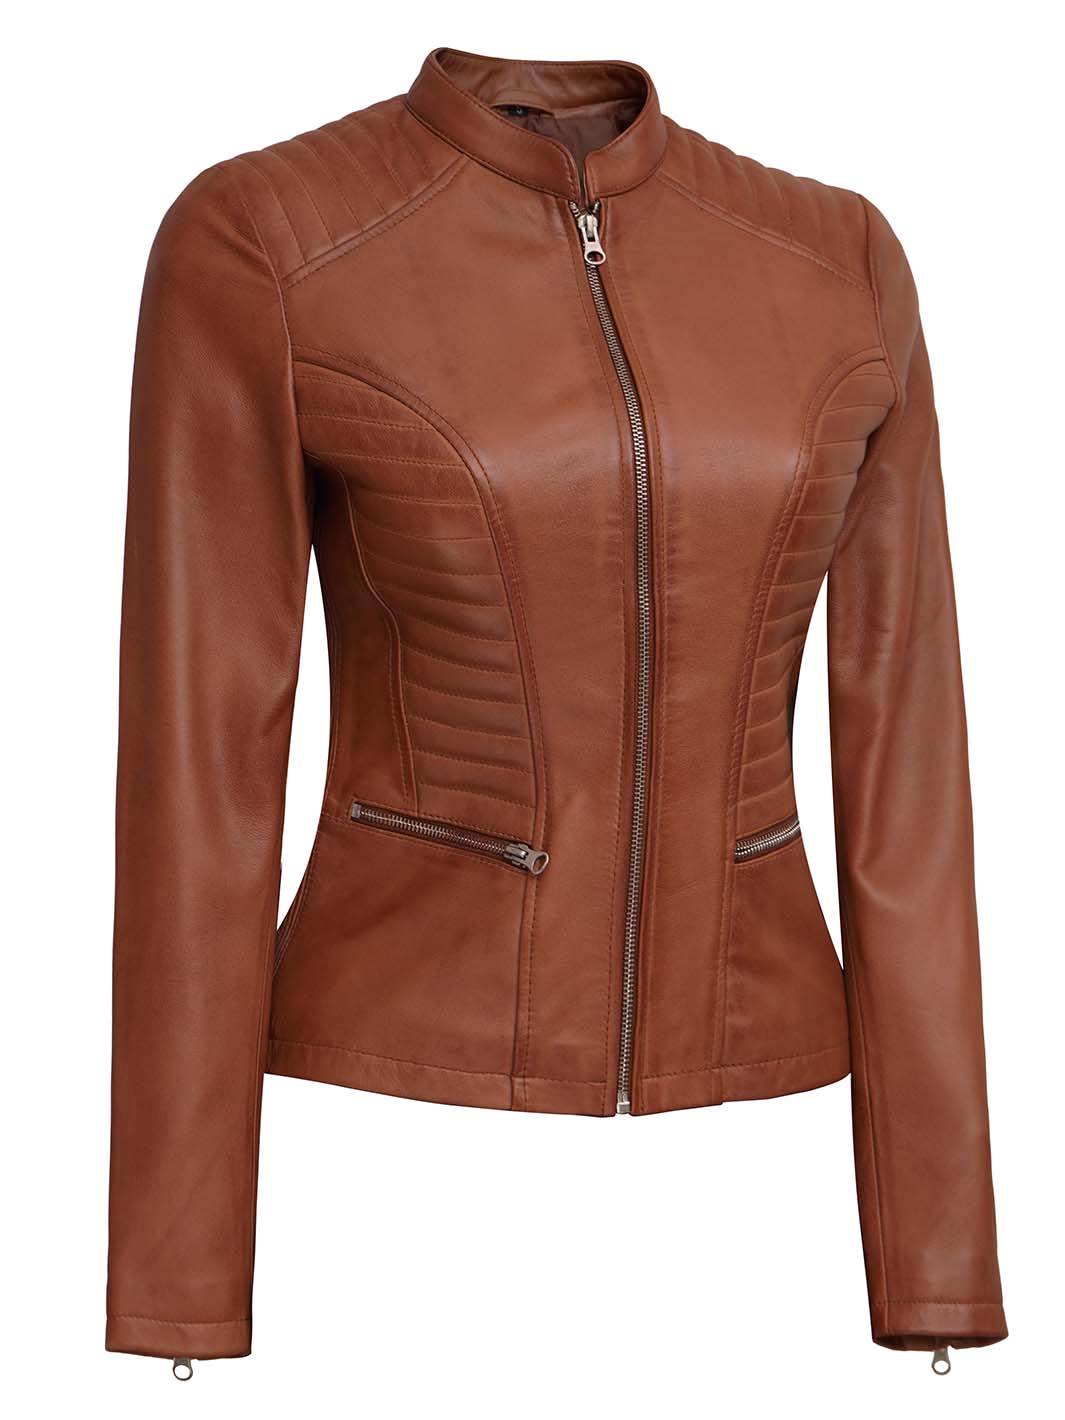 Rachel Womens Cognac Leather Jacket